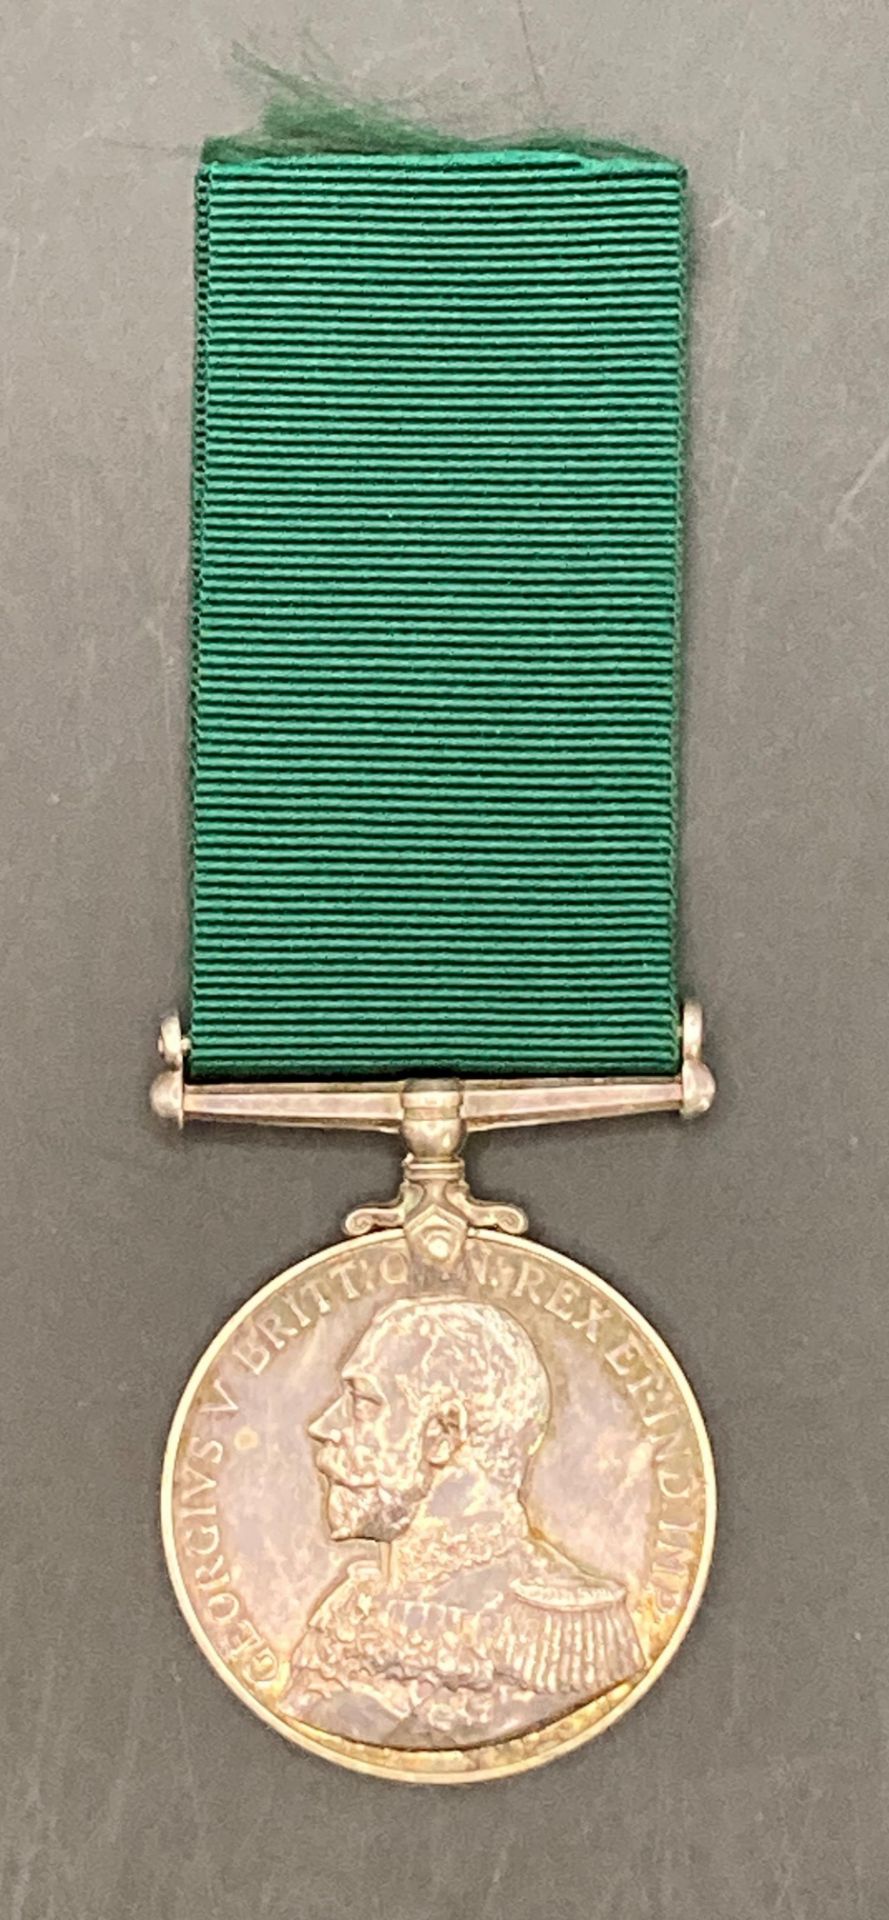 Royal Naval Reserve Long Service Medal GV awarded 16.2.